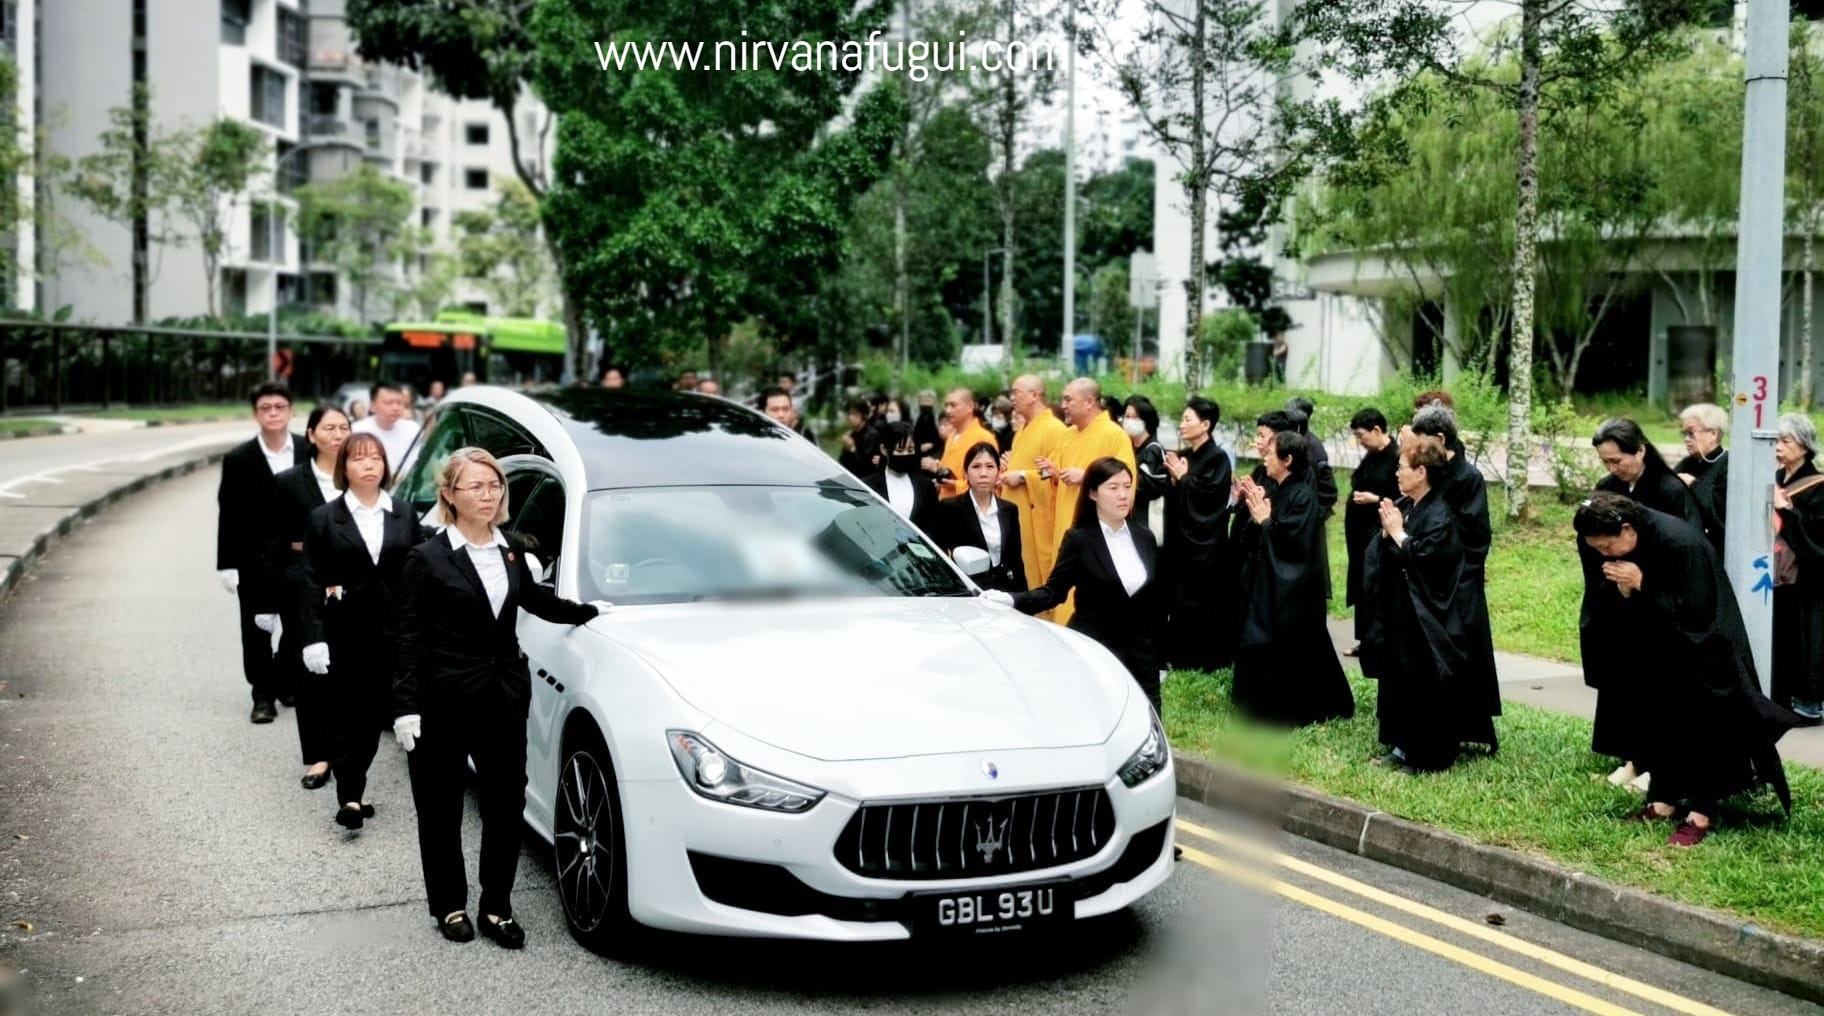 100 people Funeral Escort Team by Nirvana Singapore